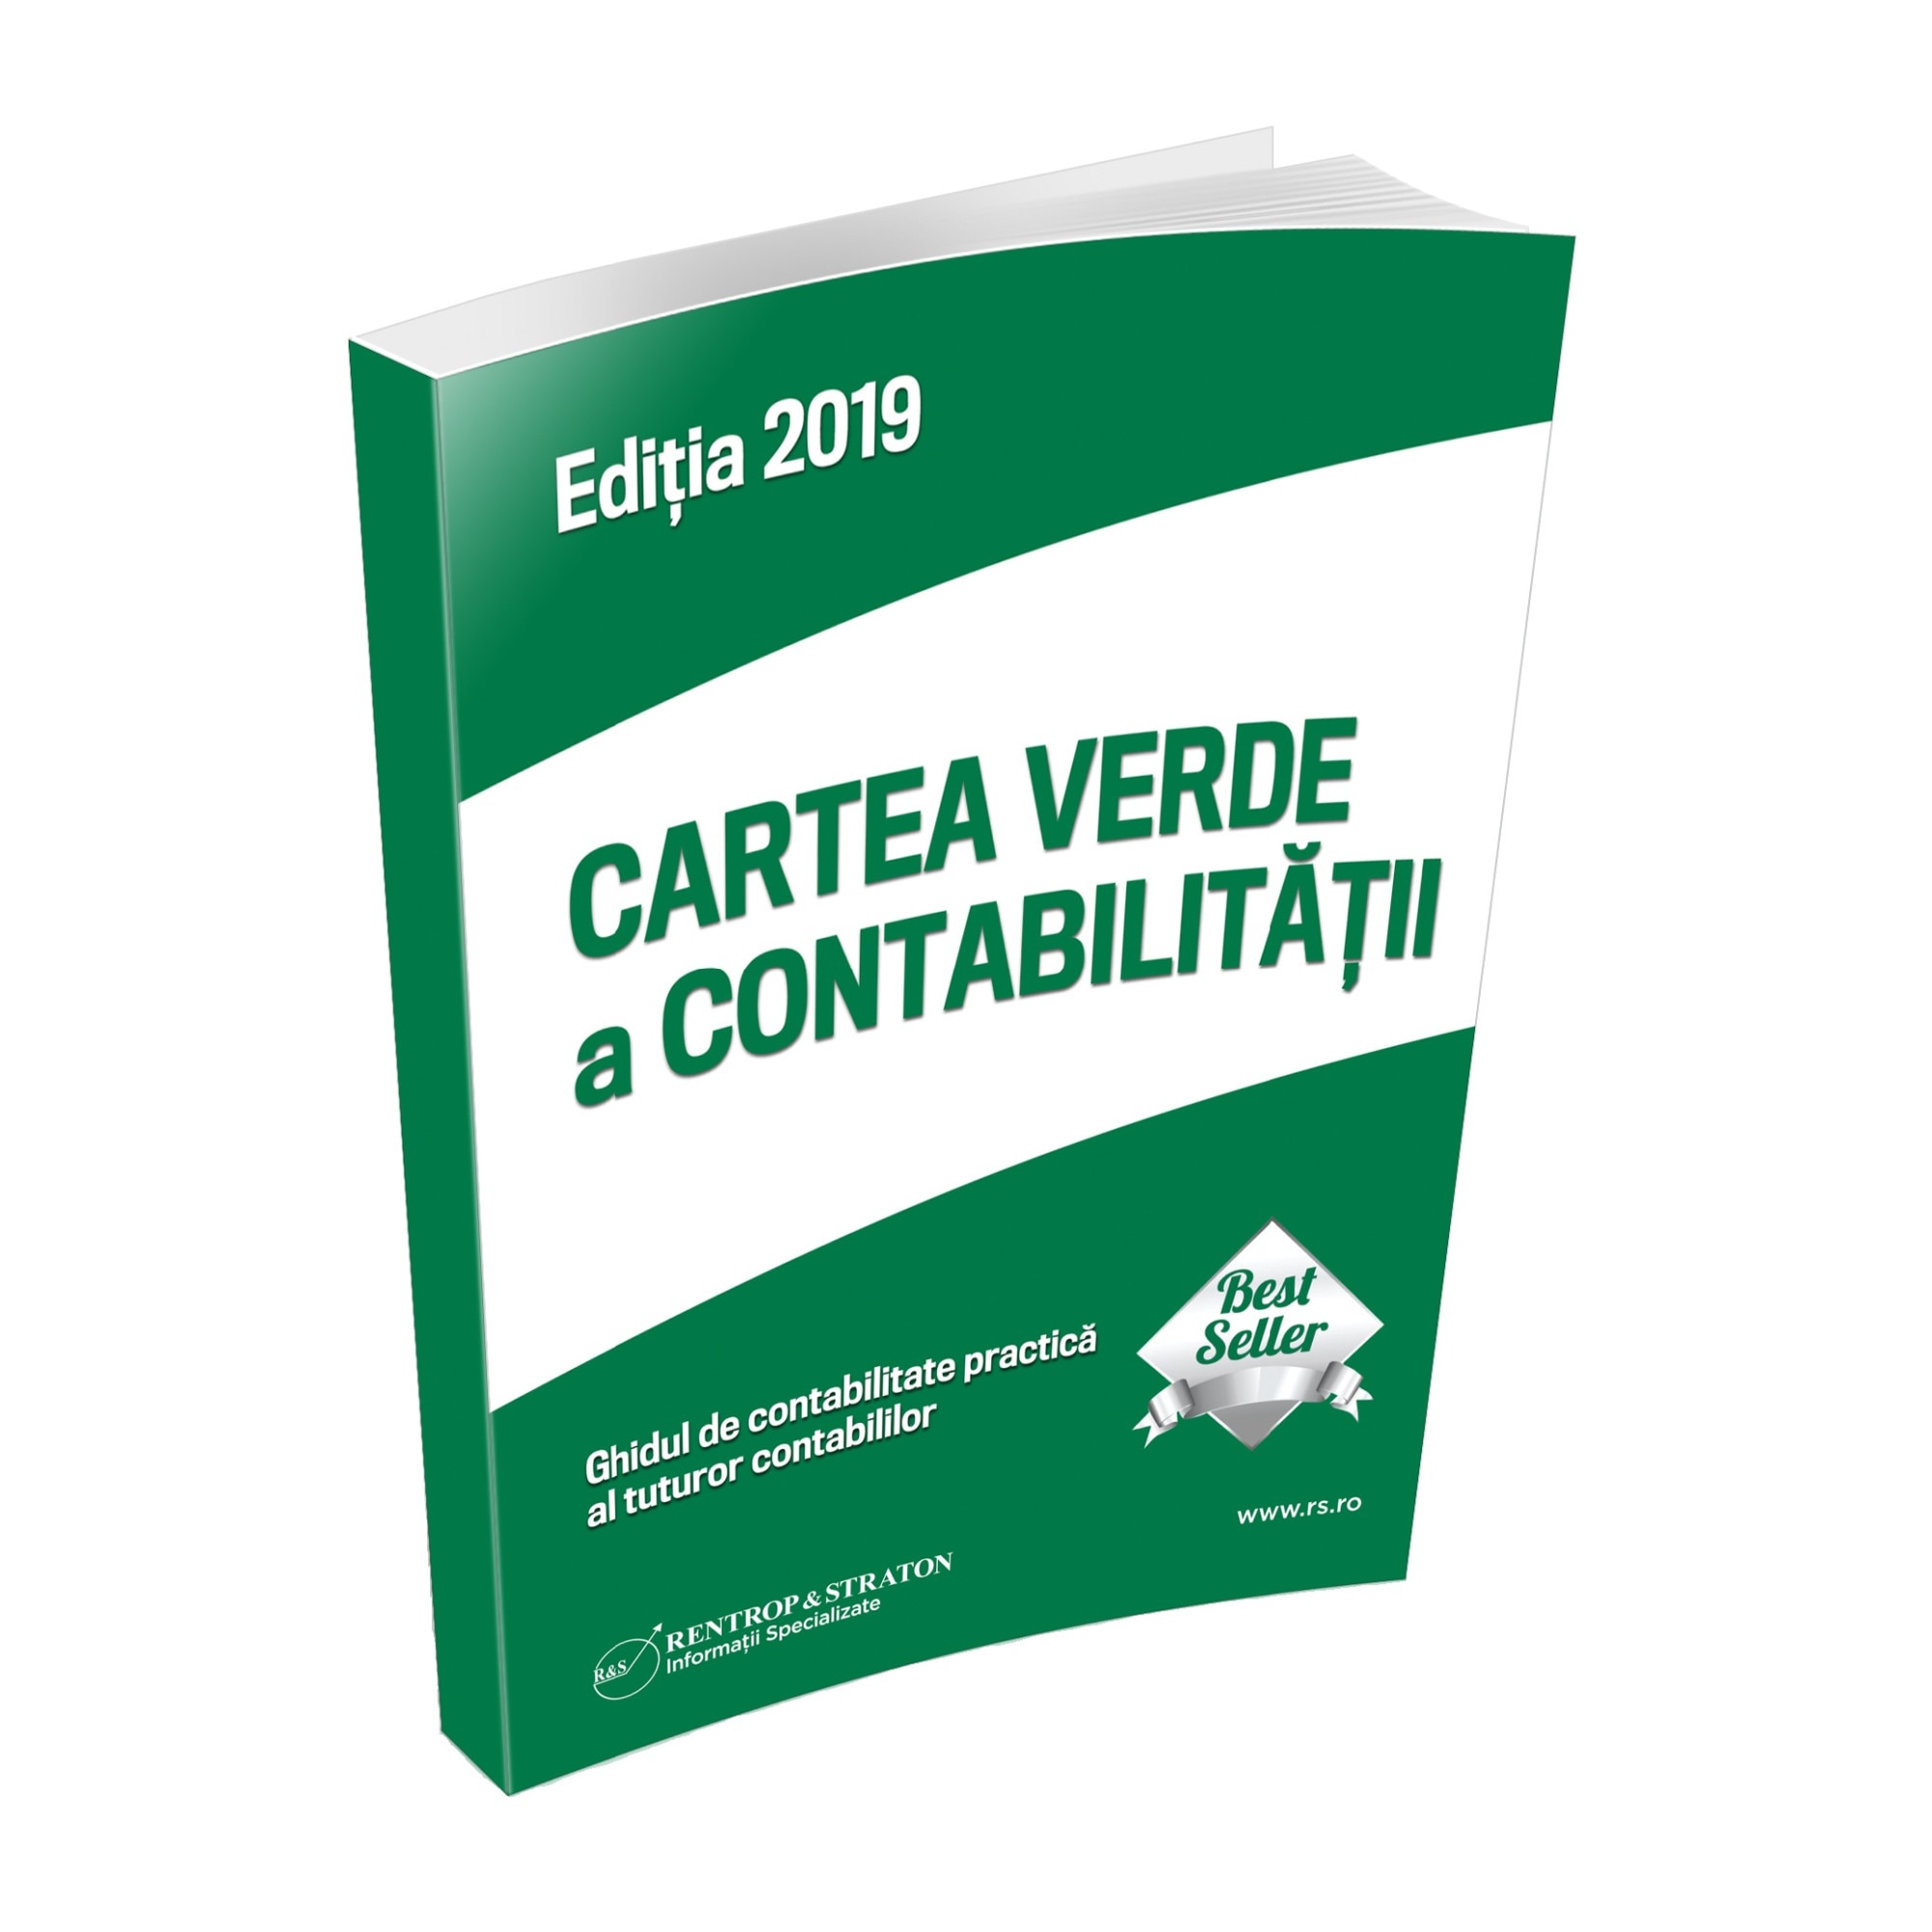 typist lung Way Cartea Verde a Contabilitatii, Rentrop&Straton, editia 2019 - eMAG.ro